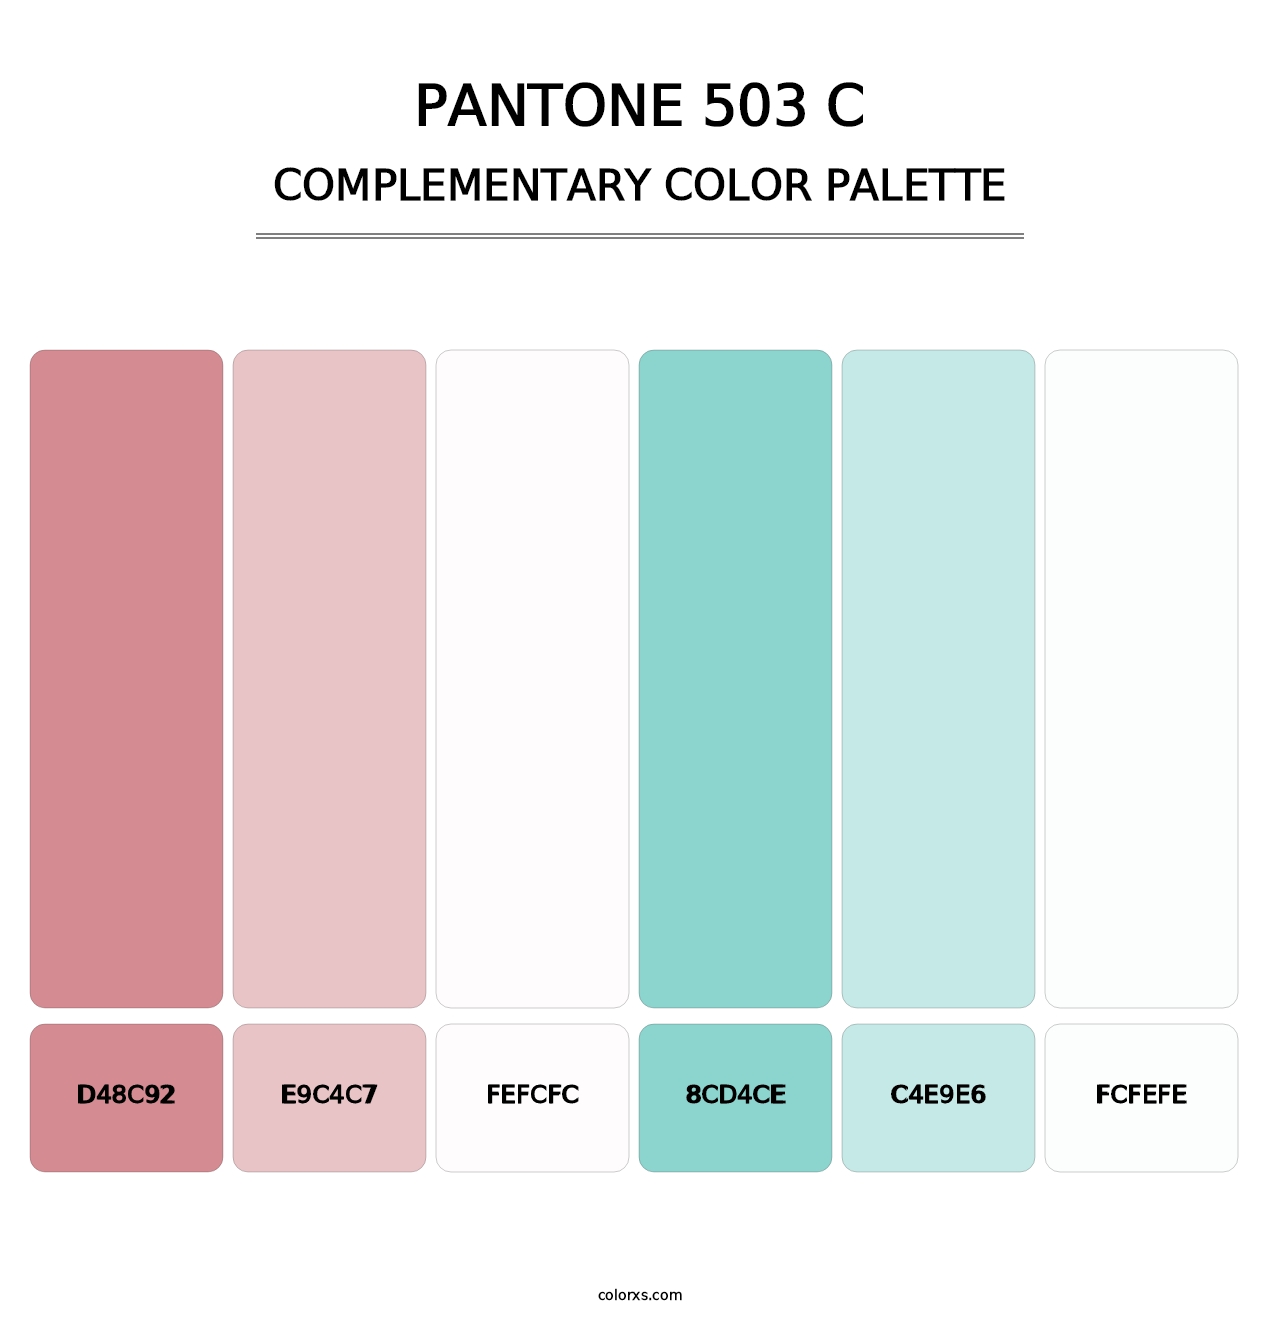 PANTONE 503 C - Complementary Color Palette